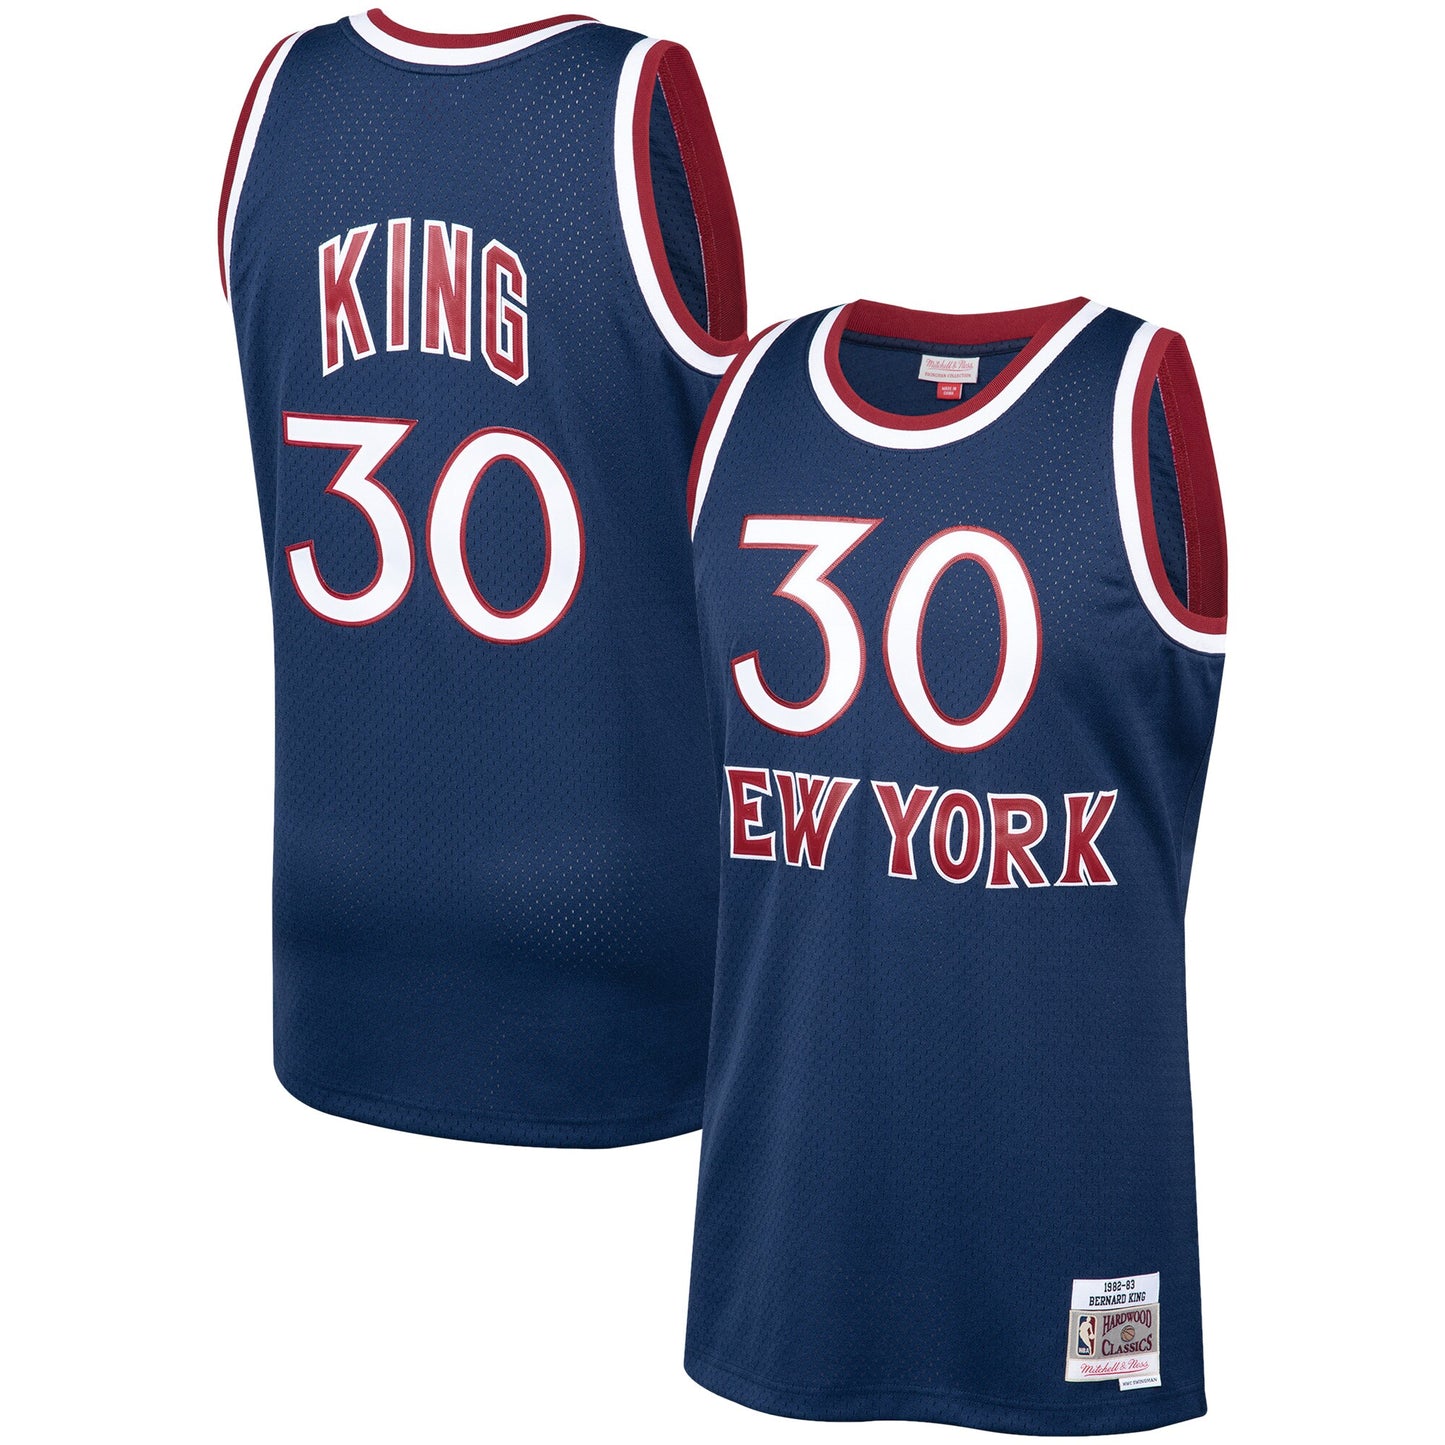 Bernard King New York Knicks Mitchell & Ness Hardwood Classics Swingman Jersey - Navy